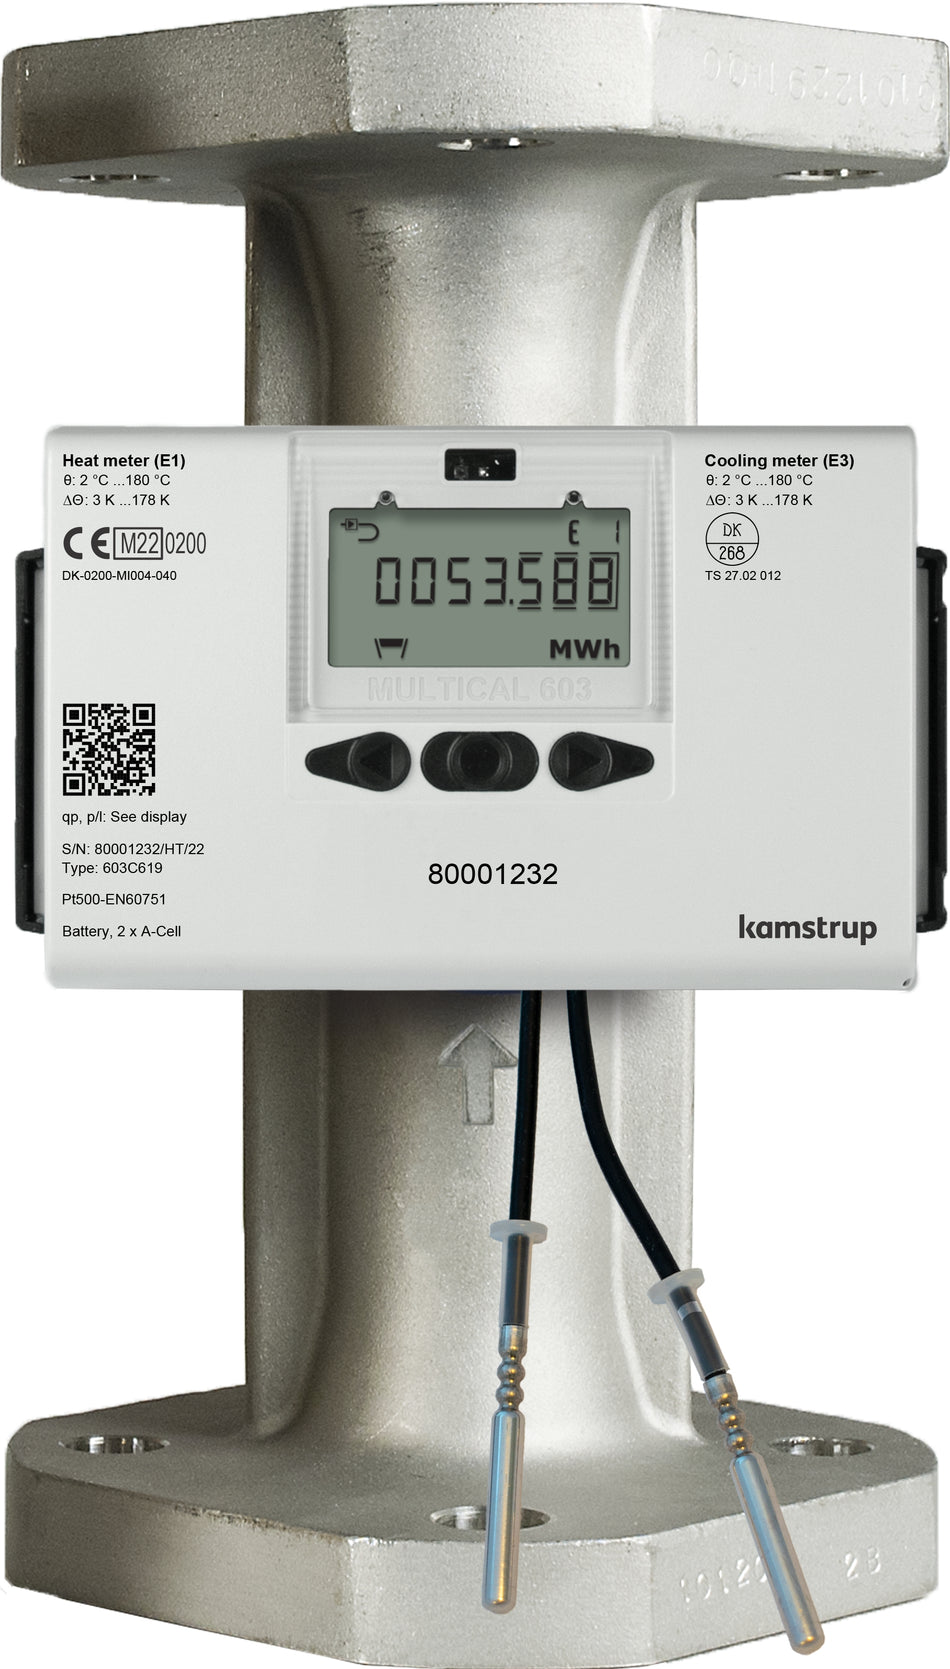 Kamstrup Multical 603 Ultrasonic Cooling Meter